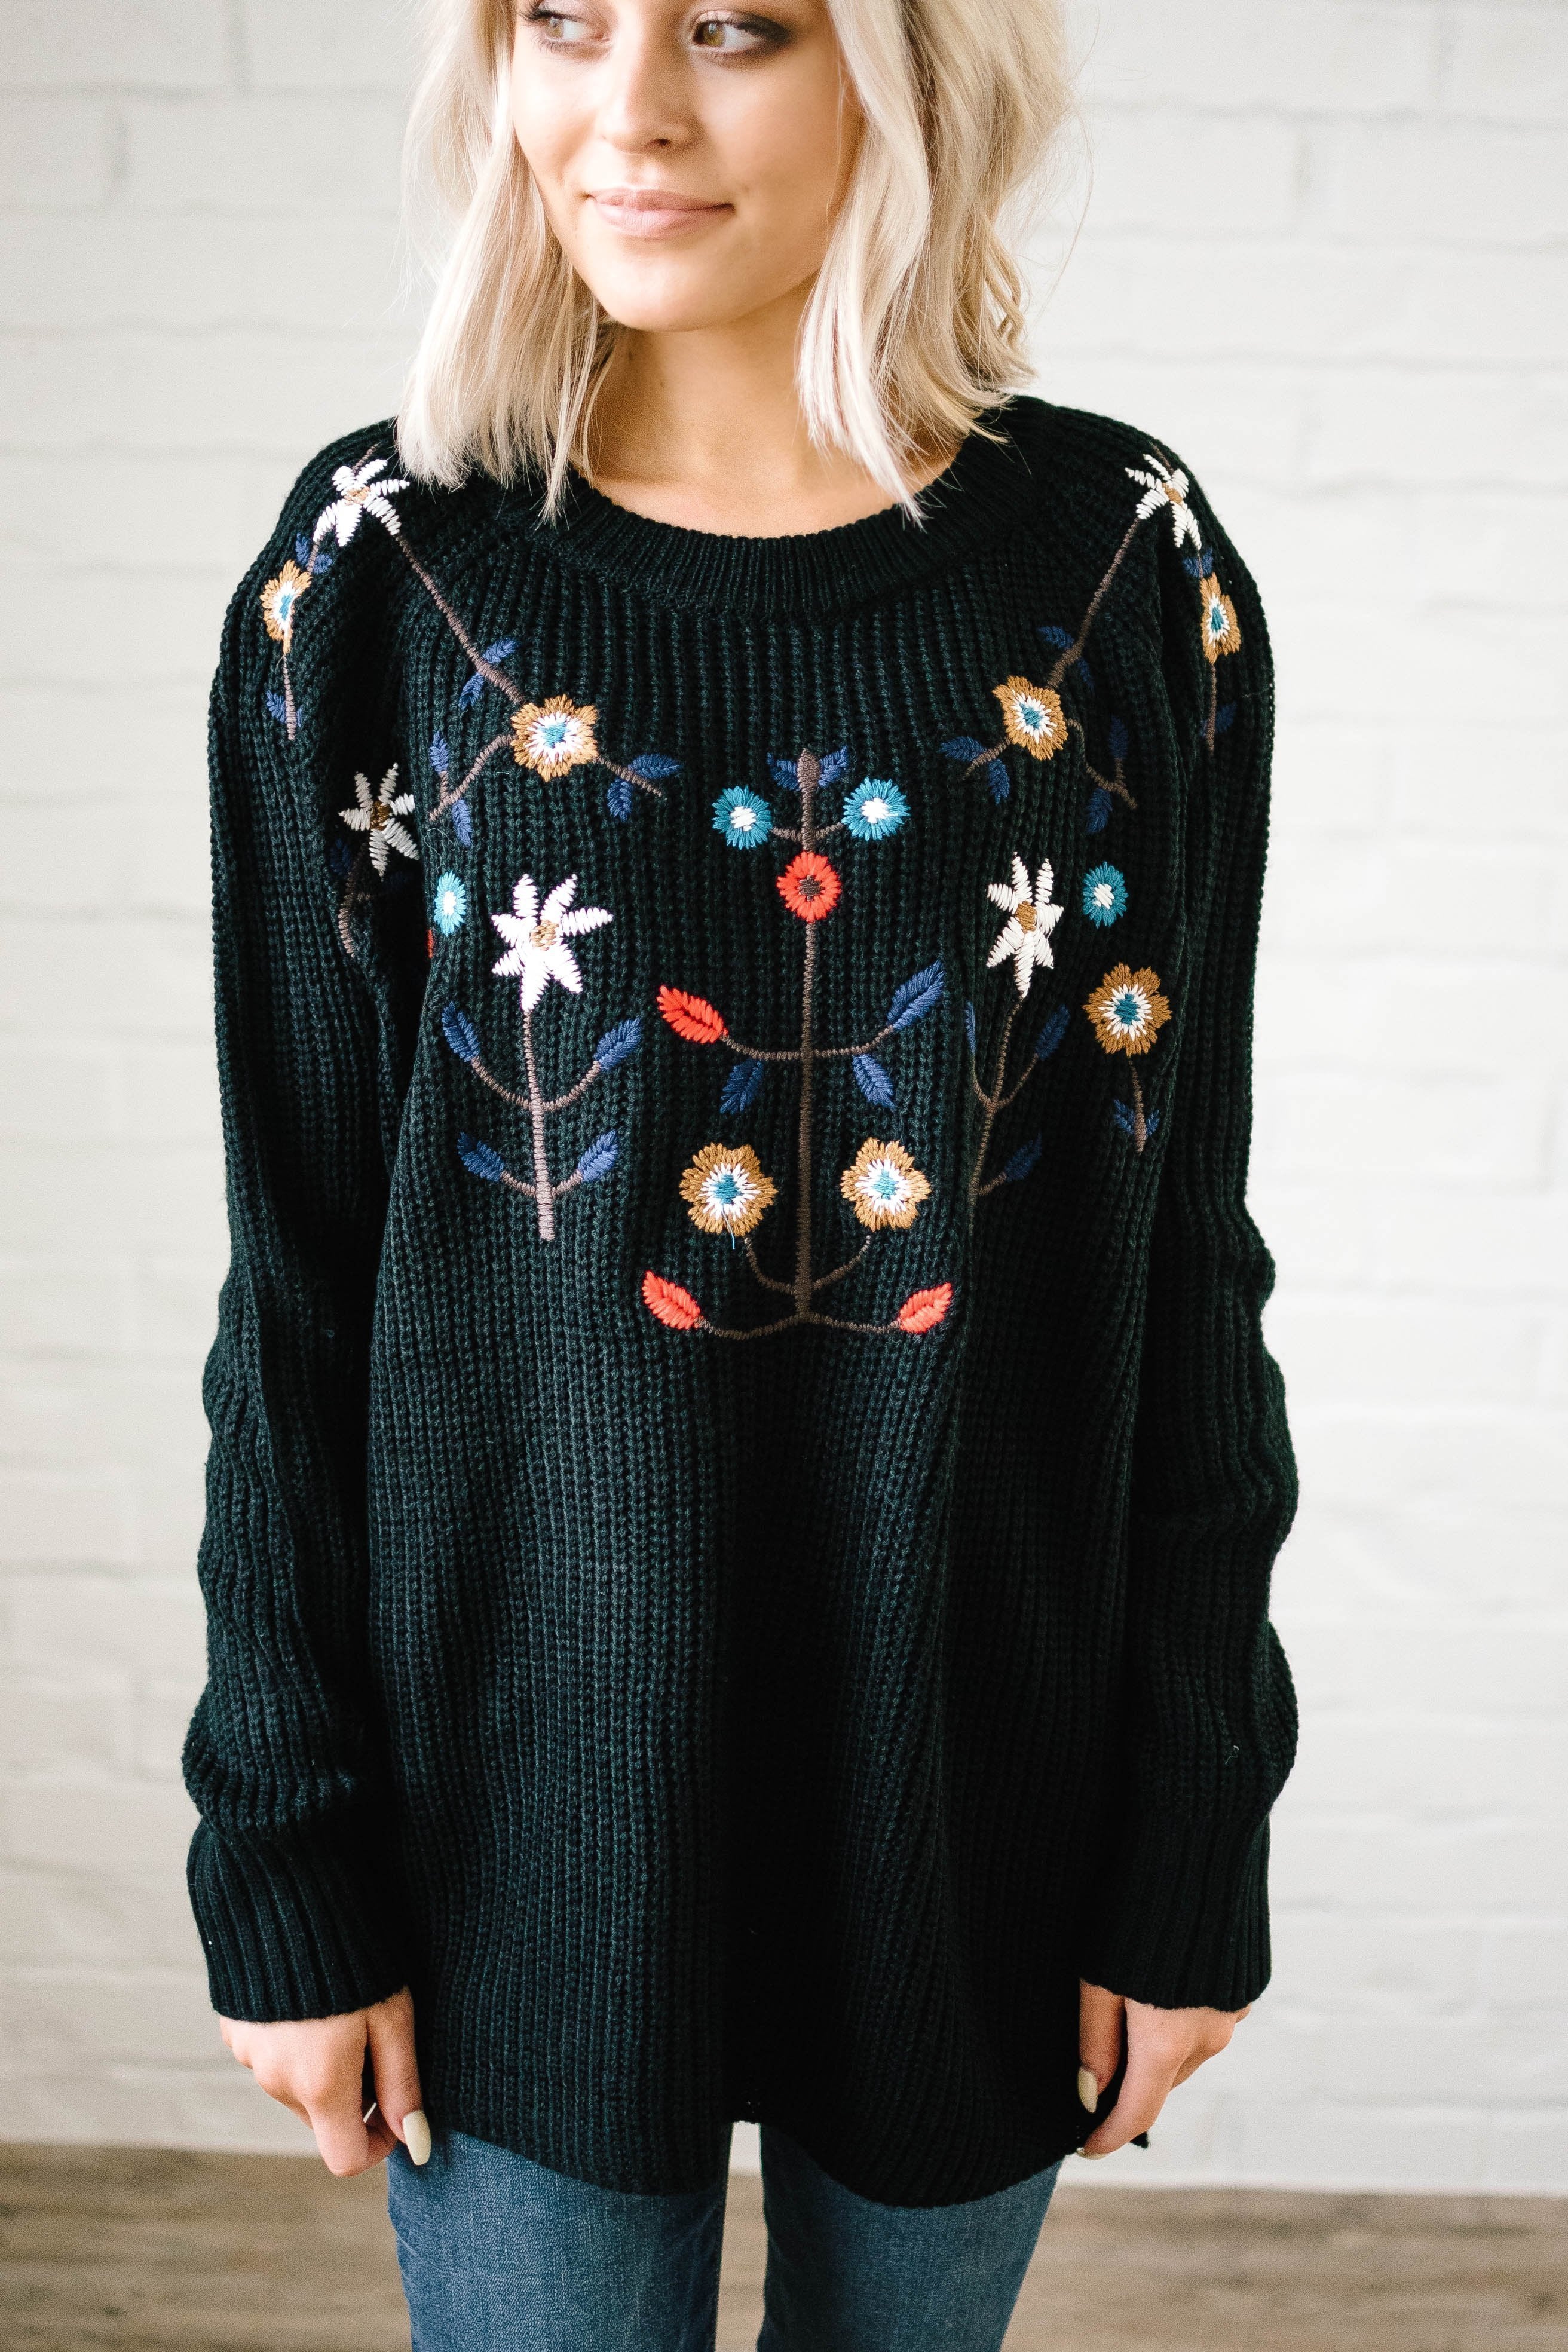 The Alpine Knit Sweater in Black